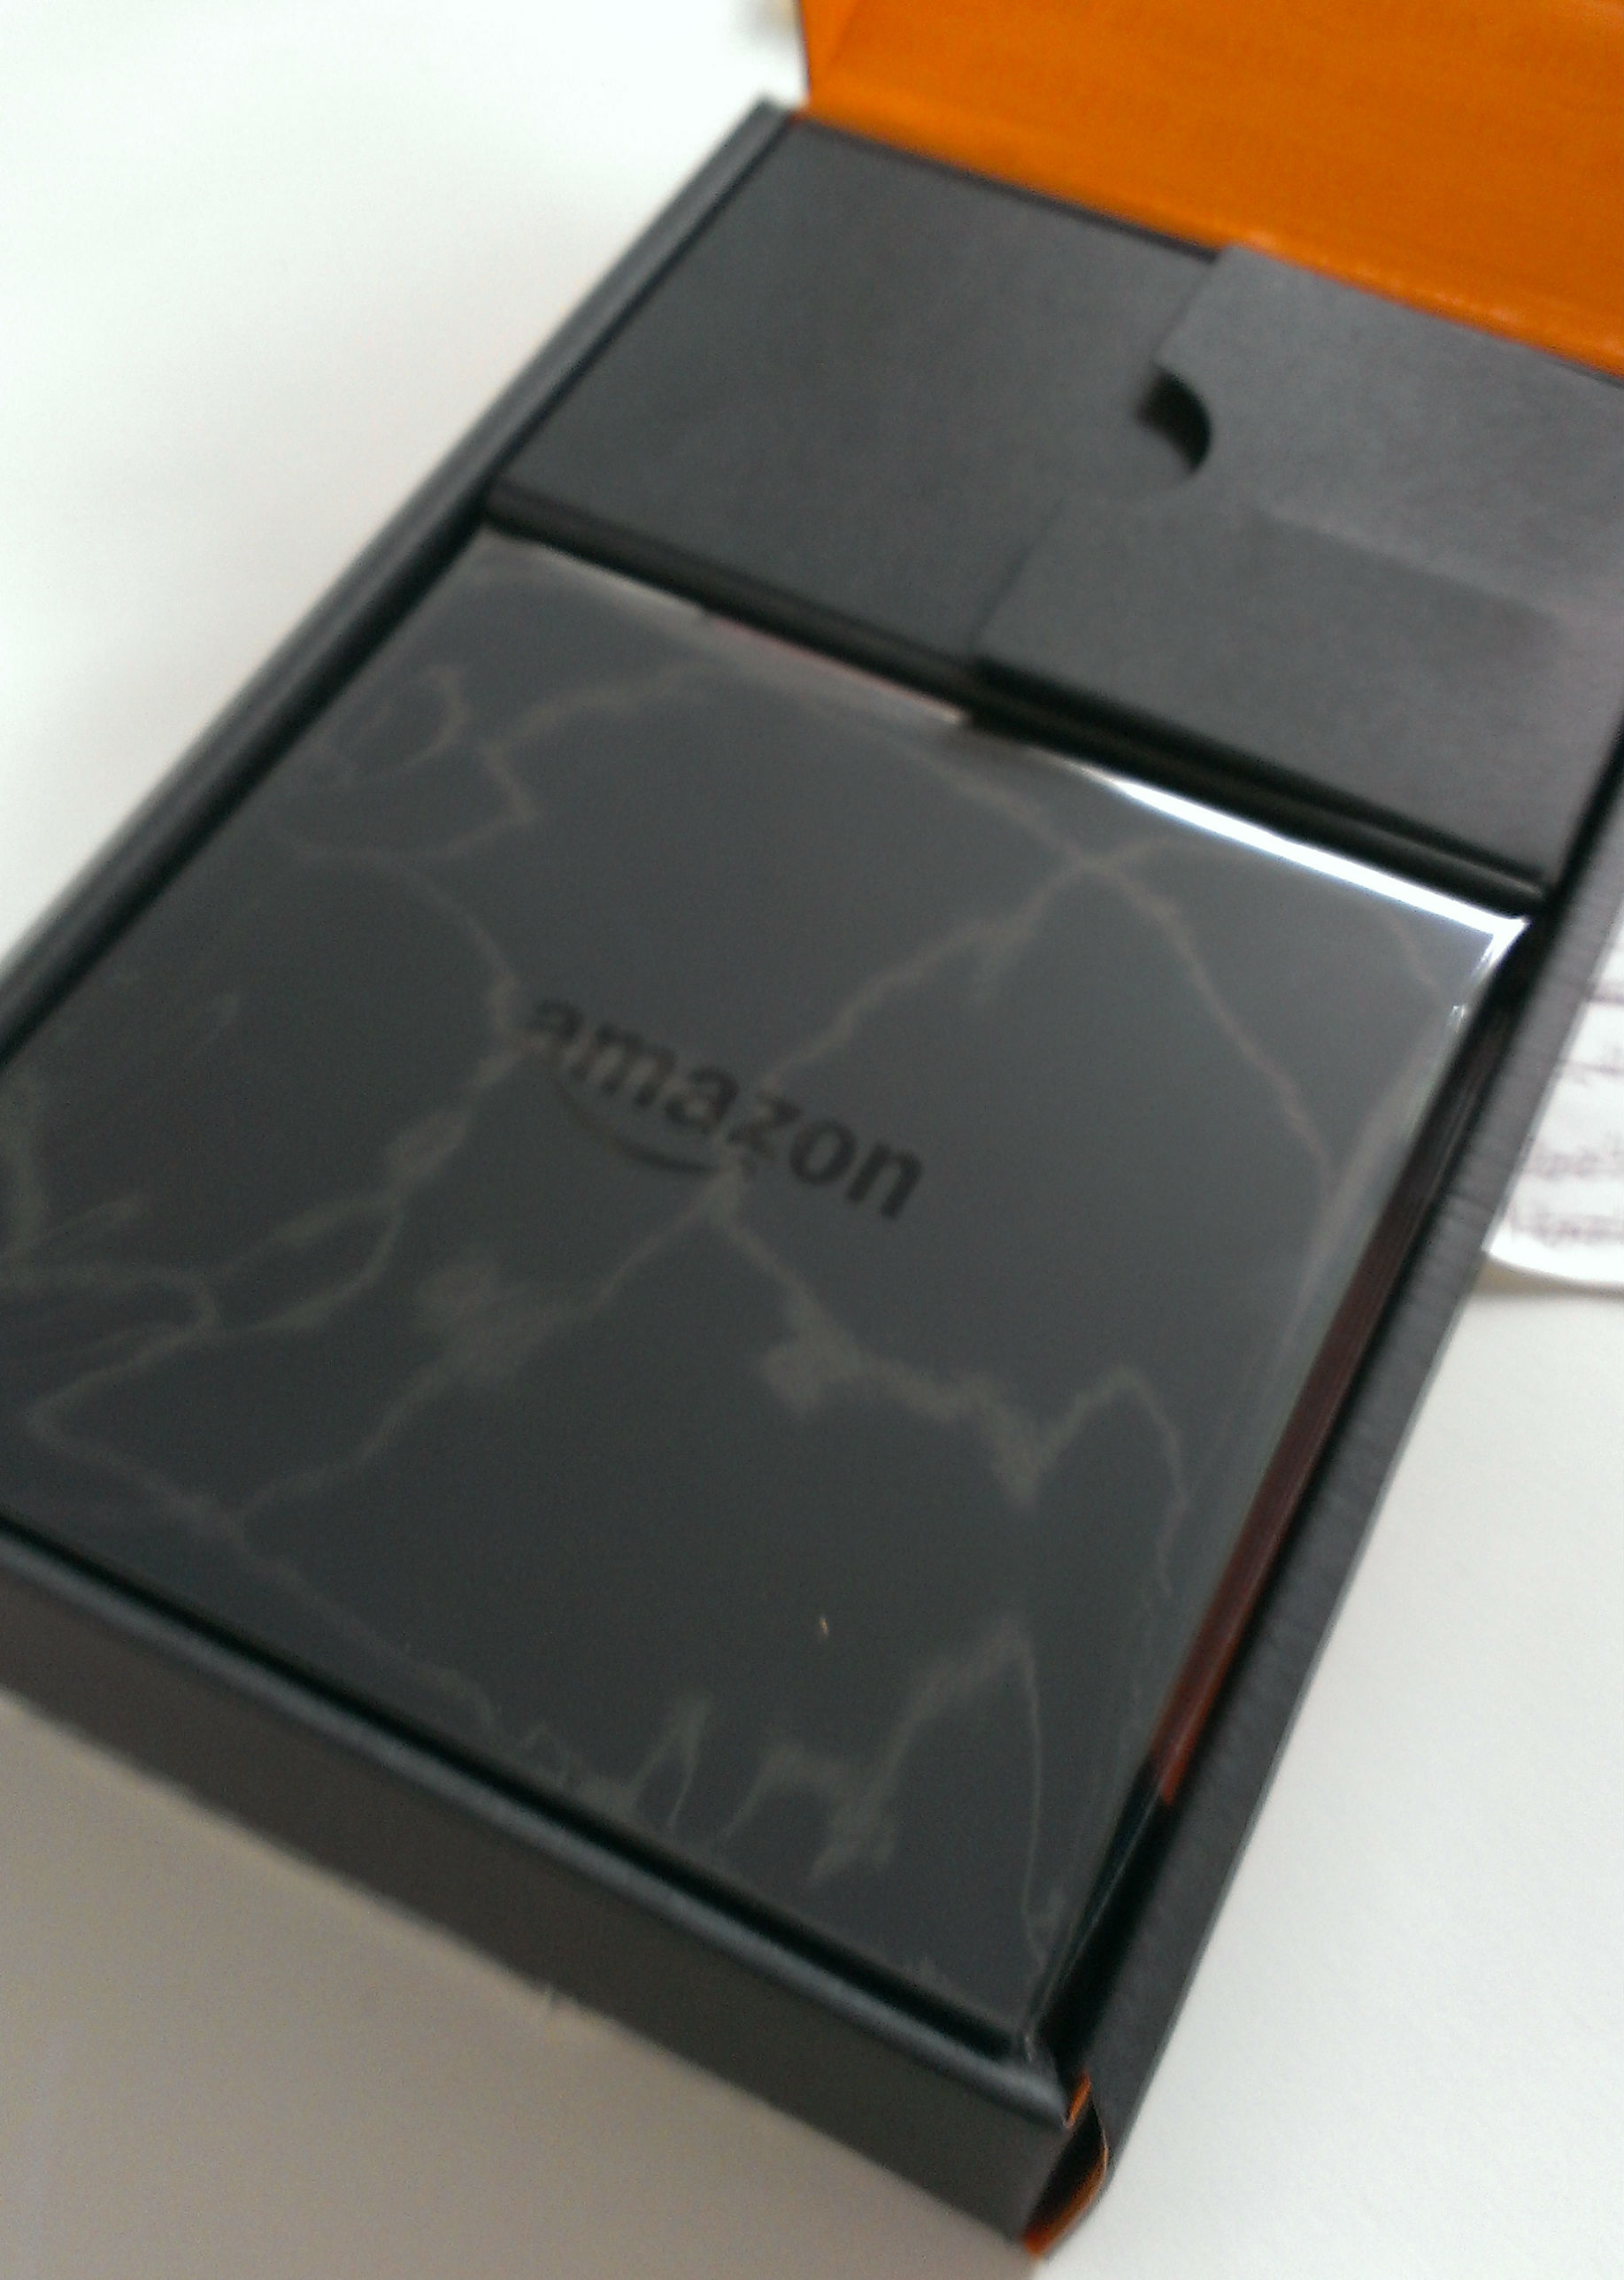 Amazon Fire TV Unboxing